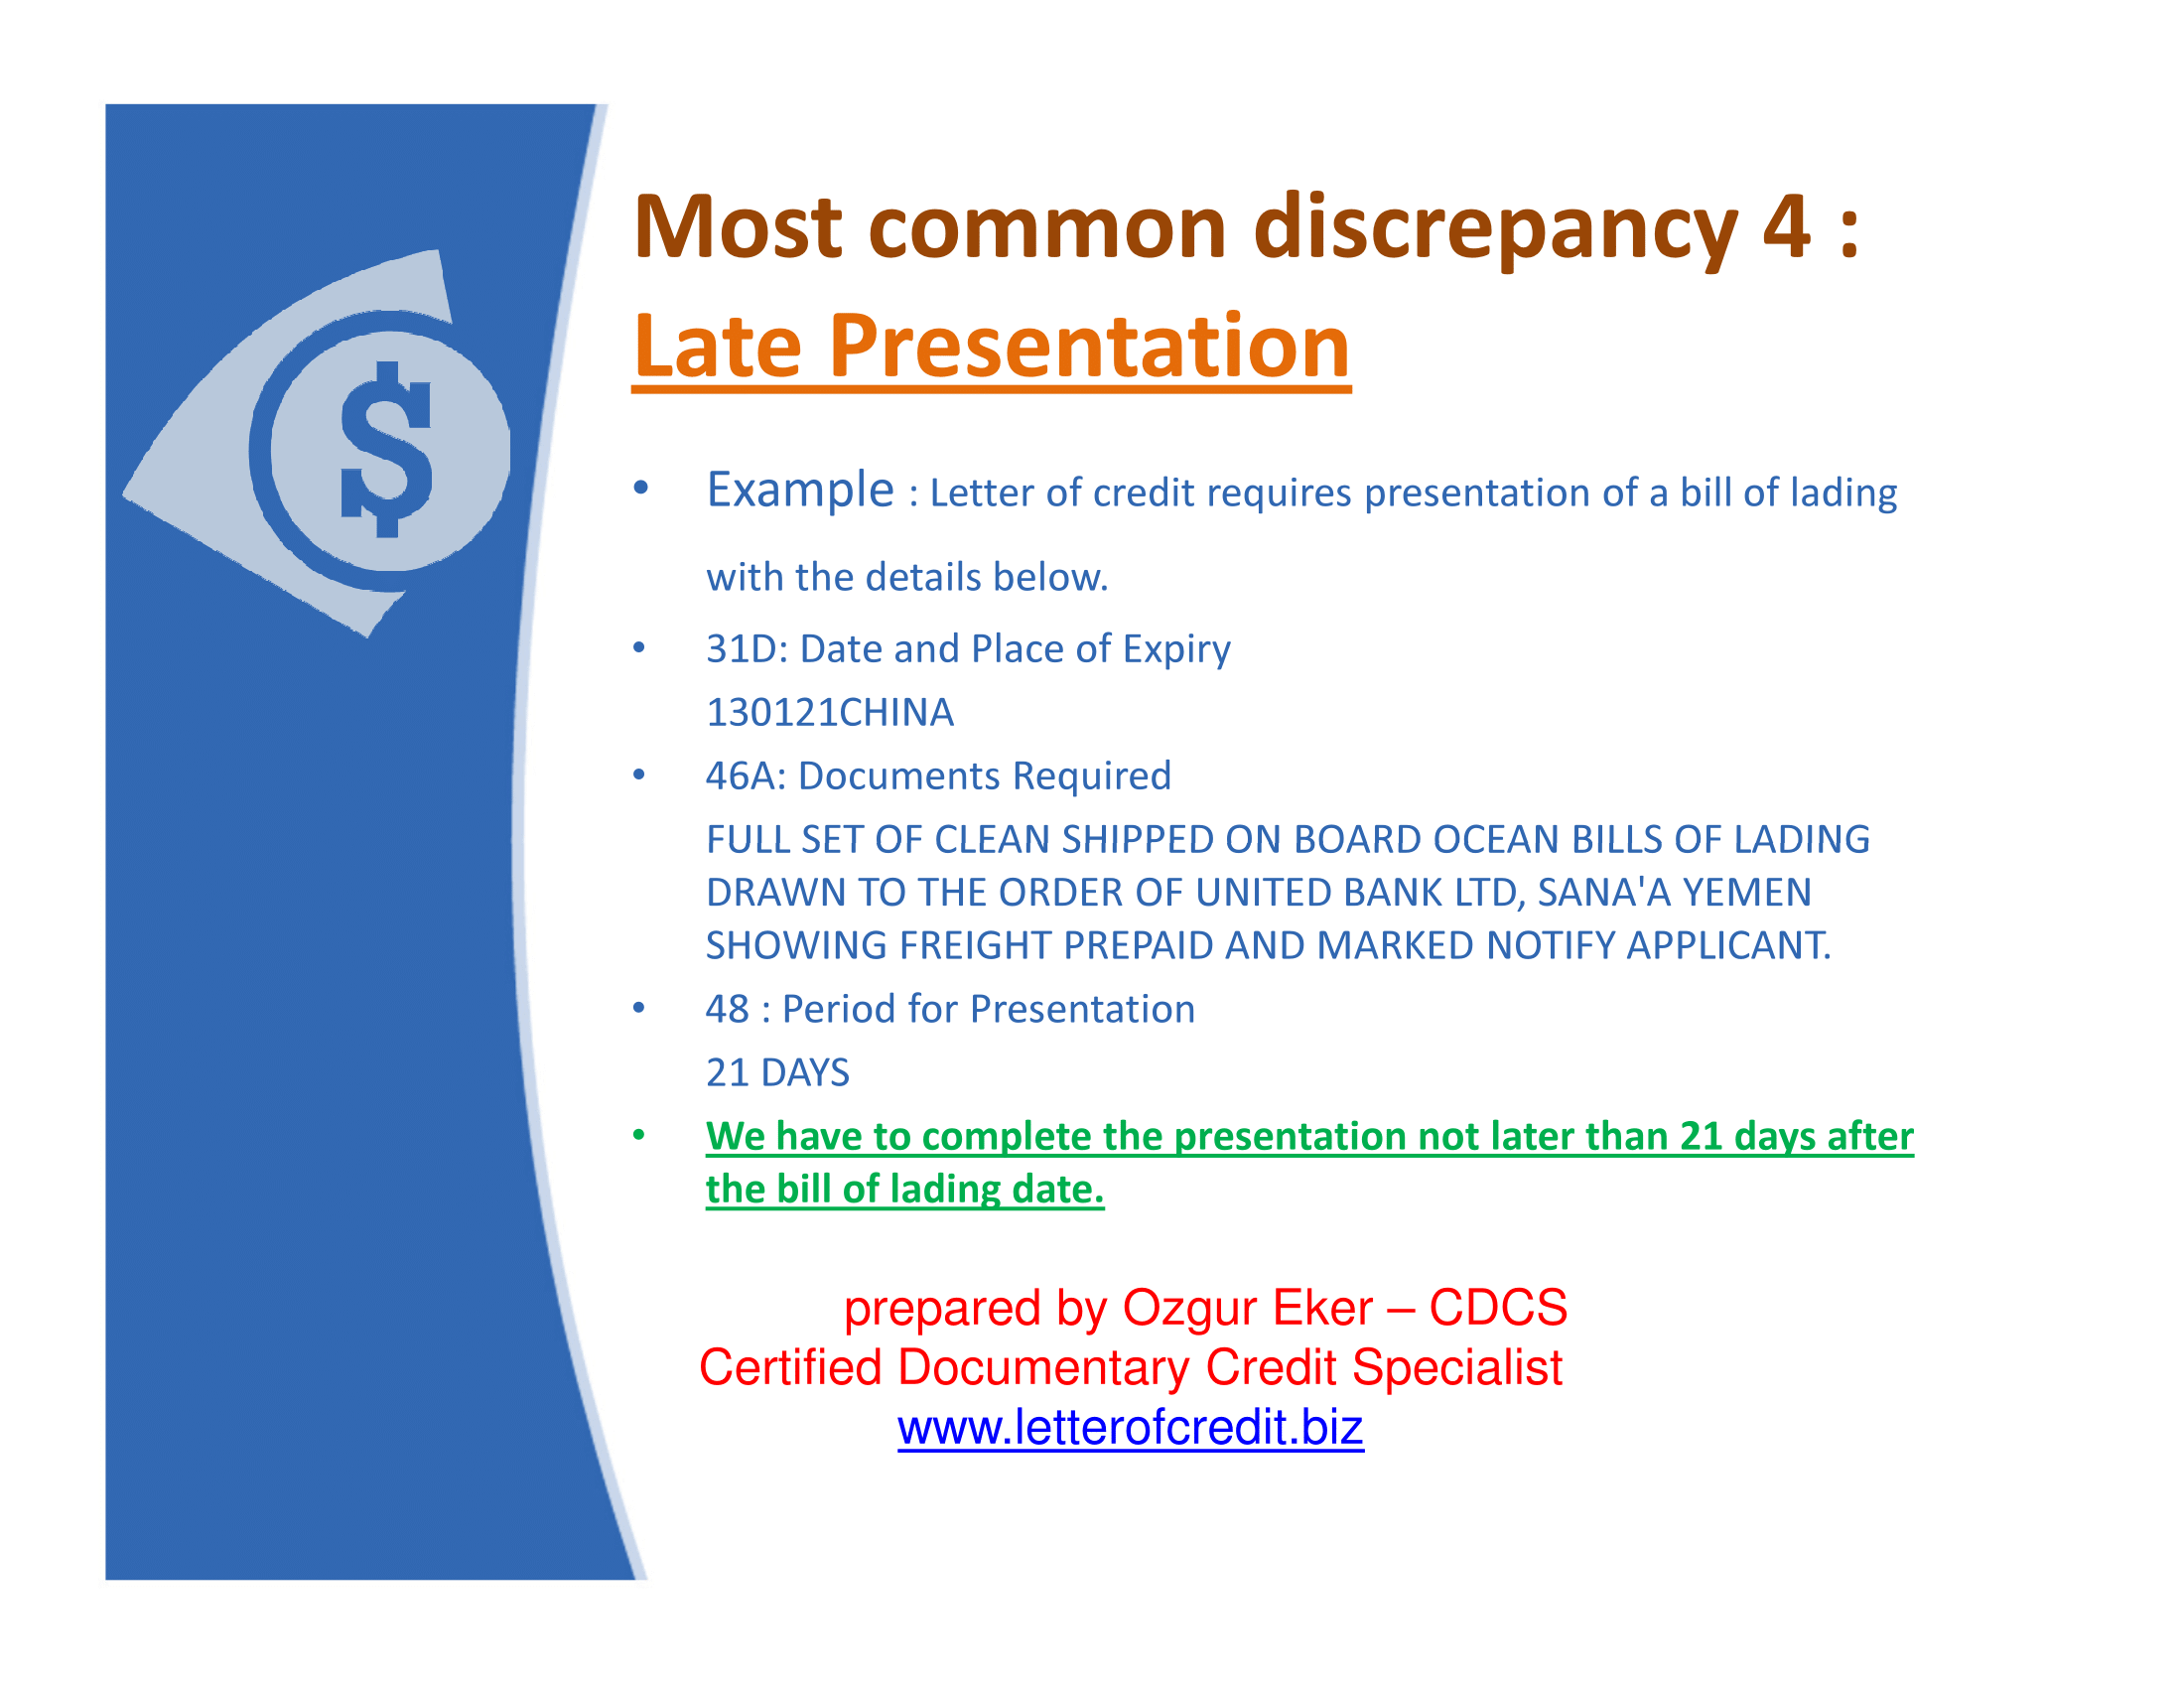 late presentation discrepancy example